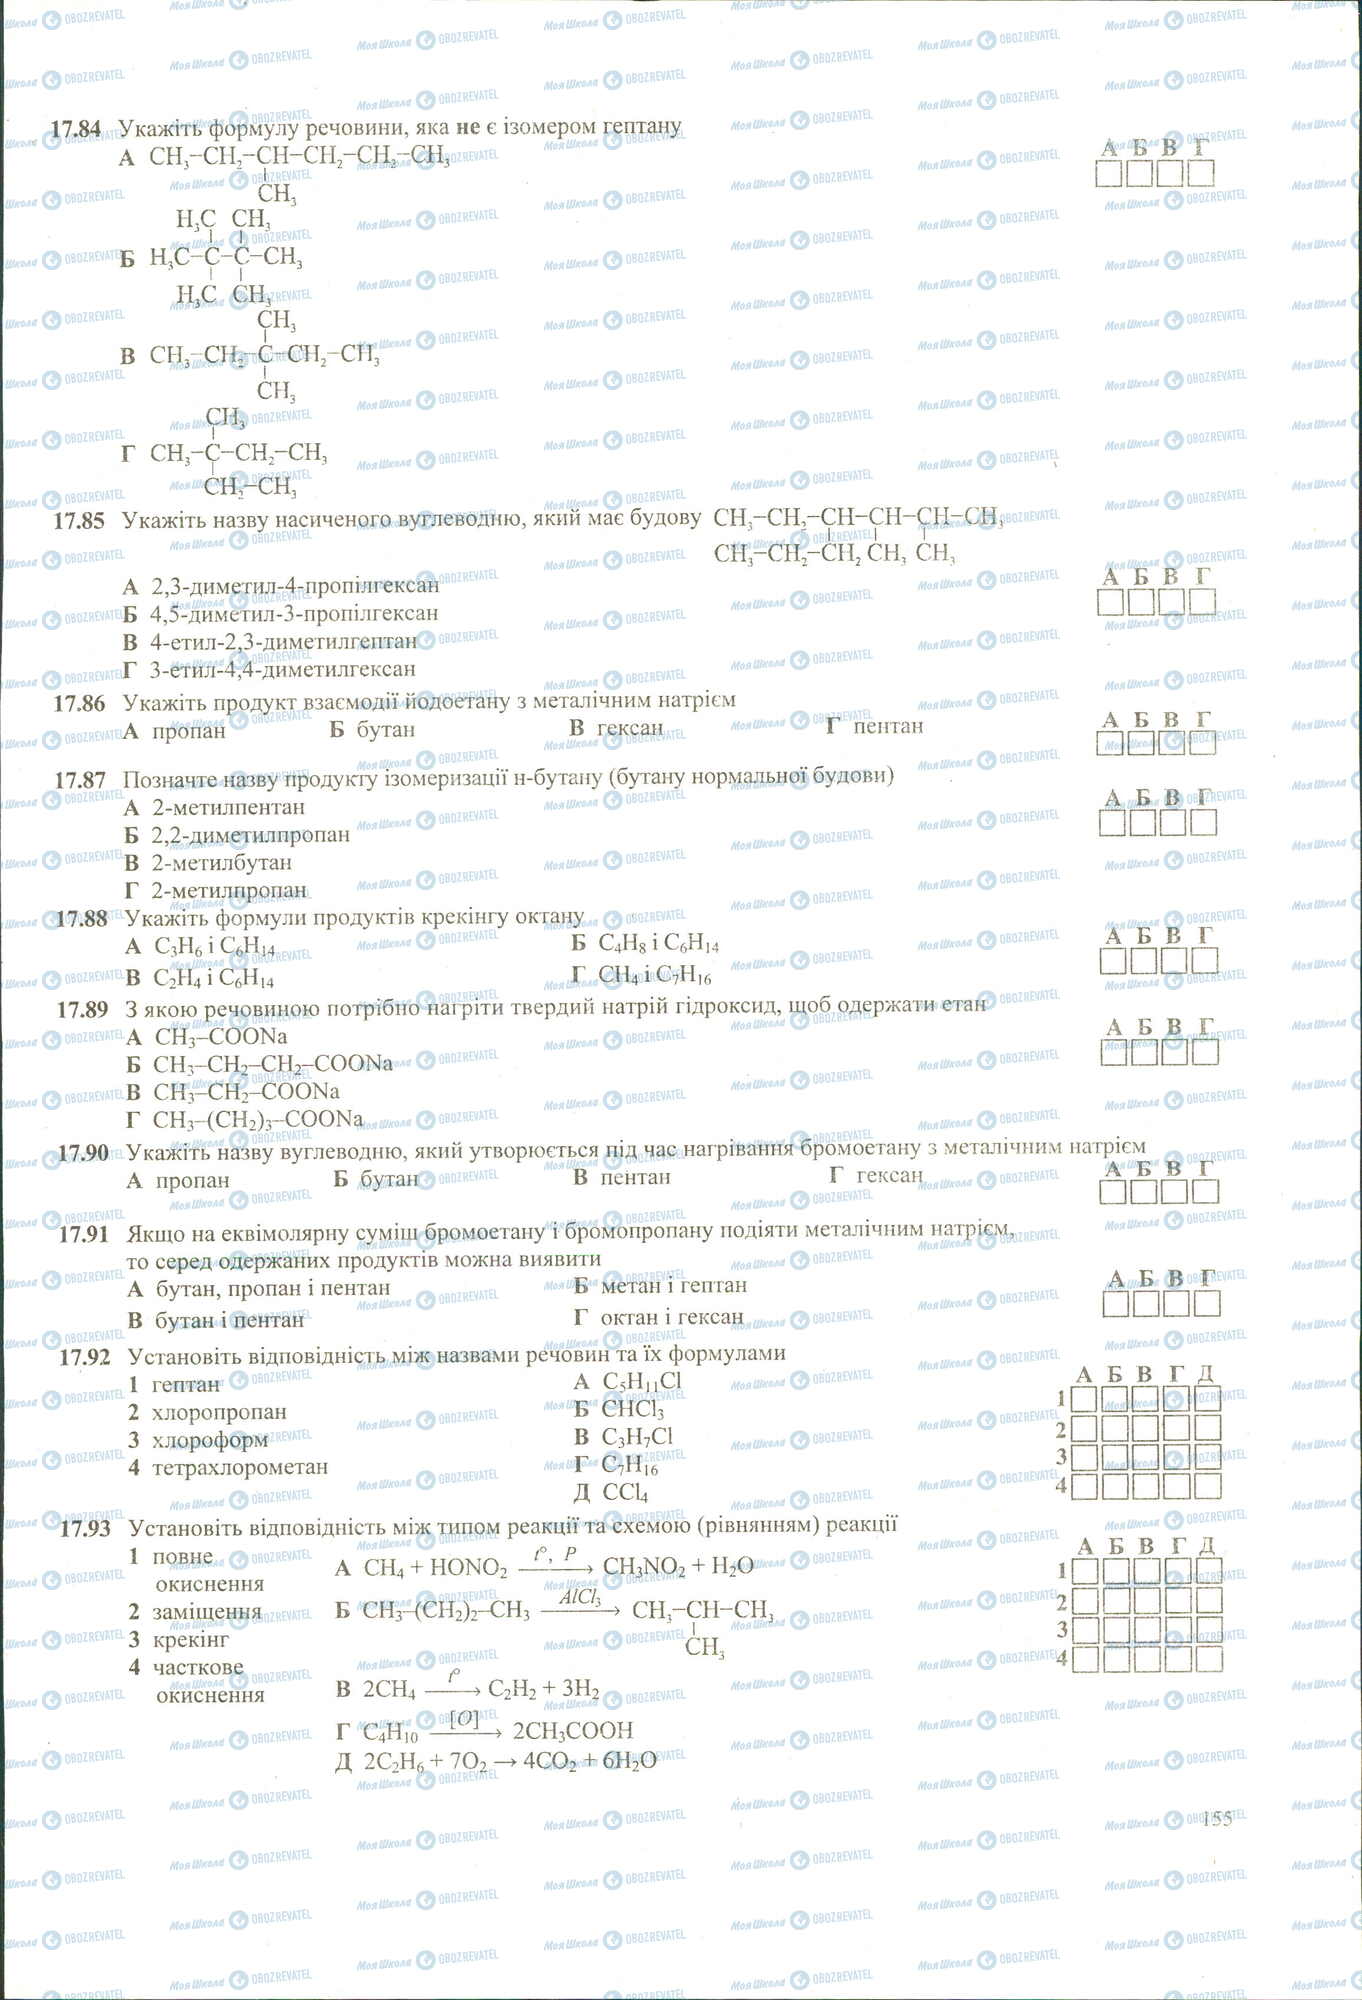 ЗНО Химия 11 класс страница 84-93